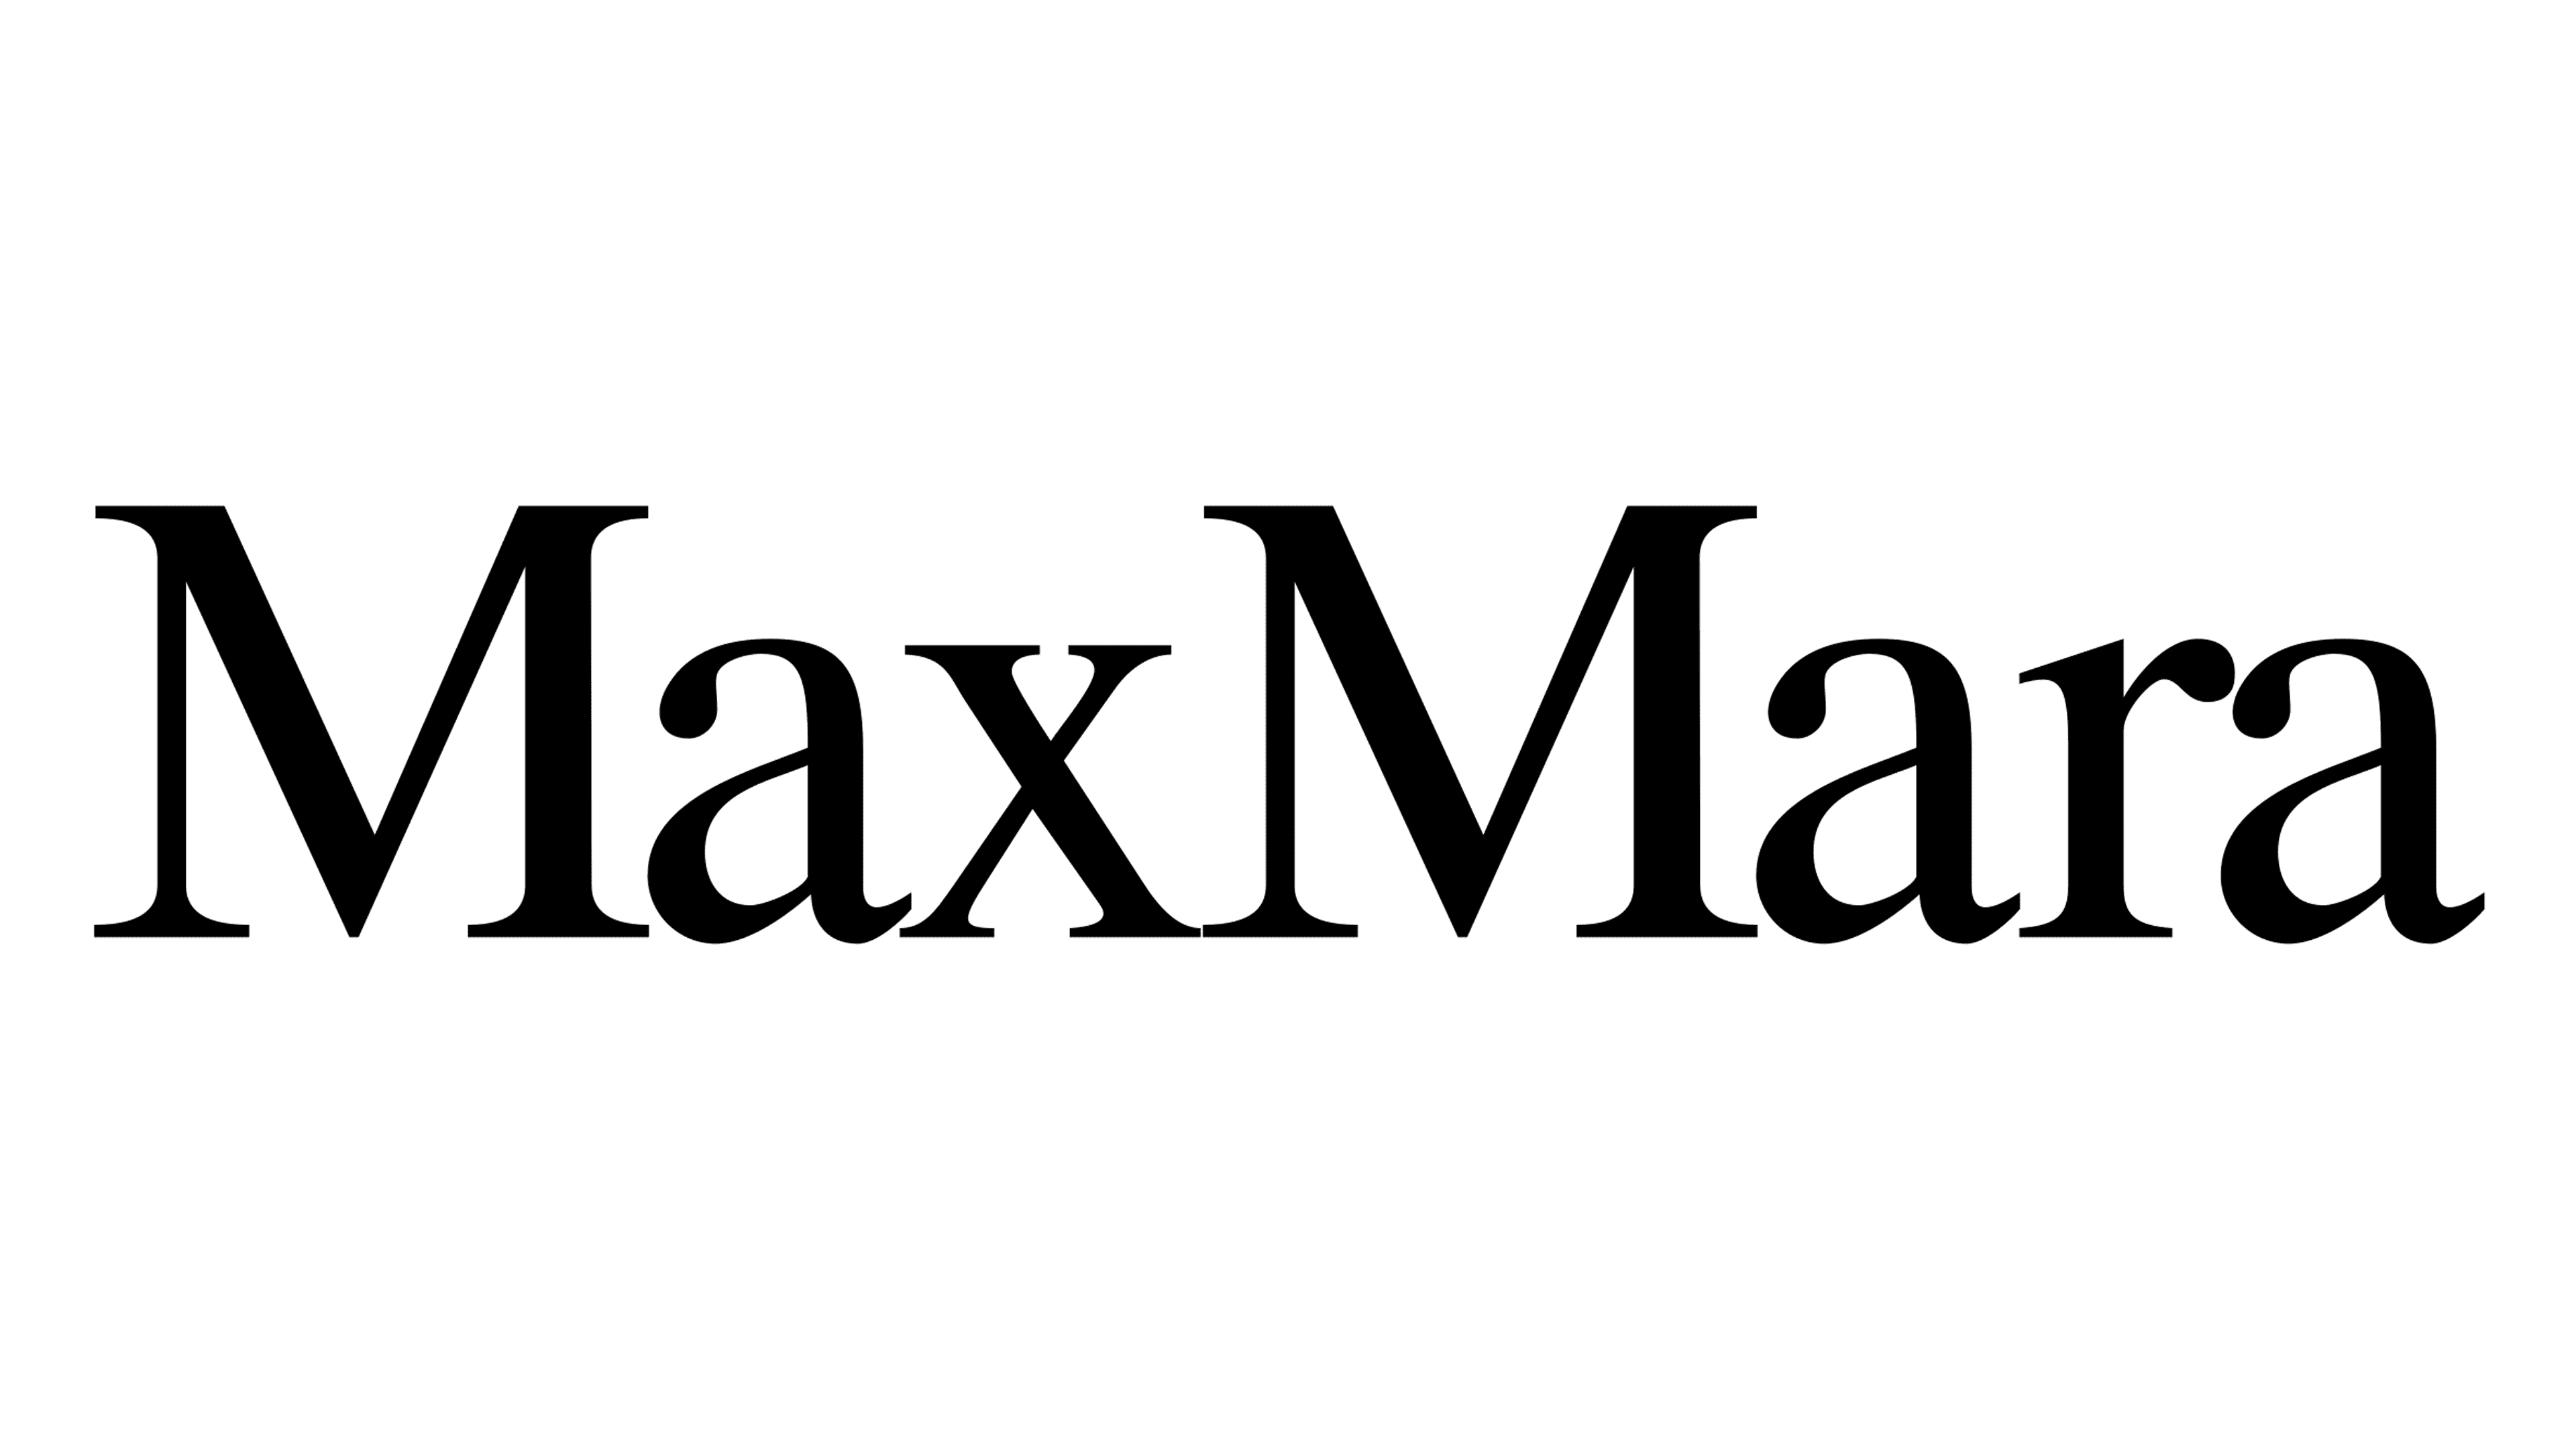 Max Mara logo